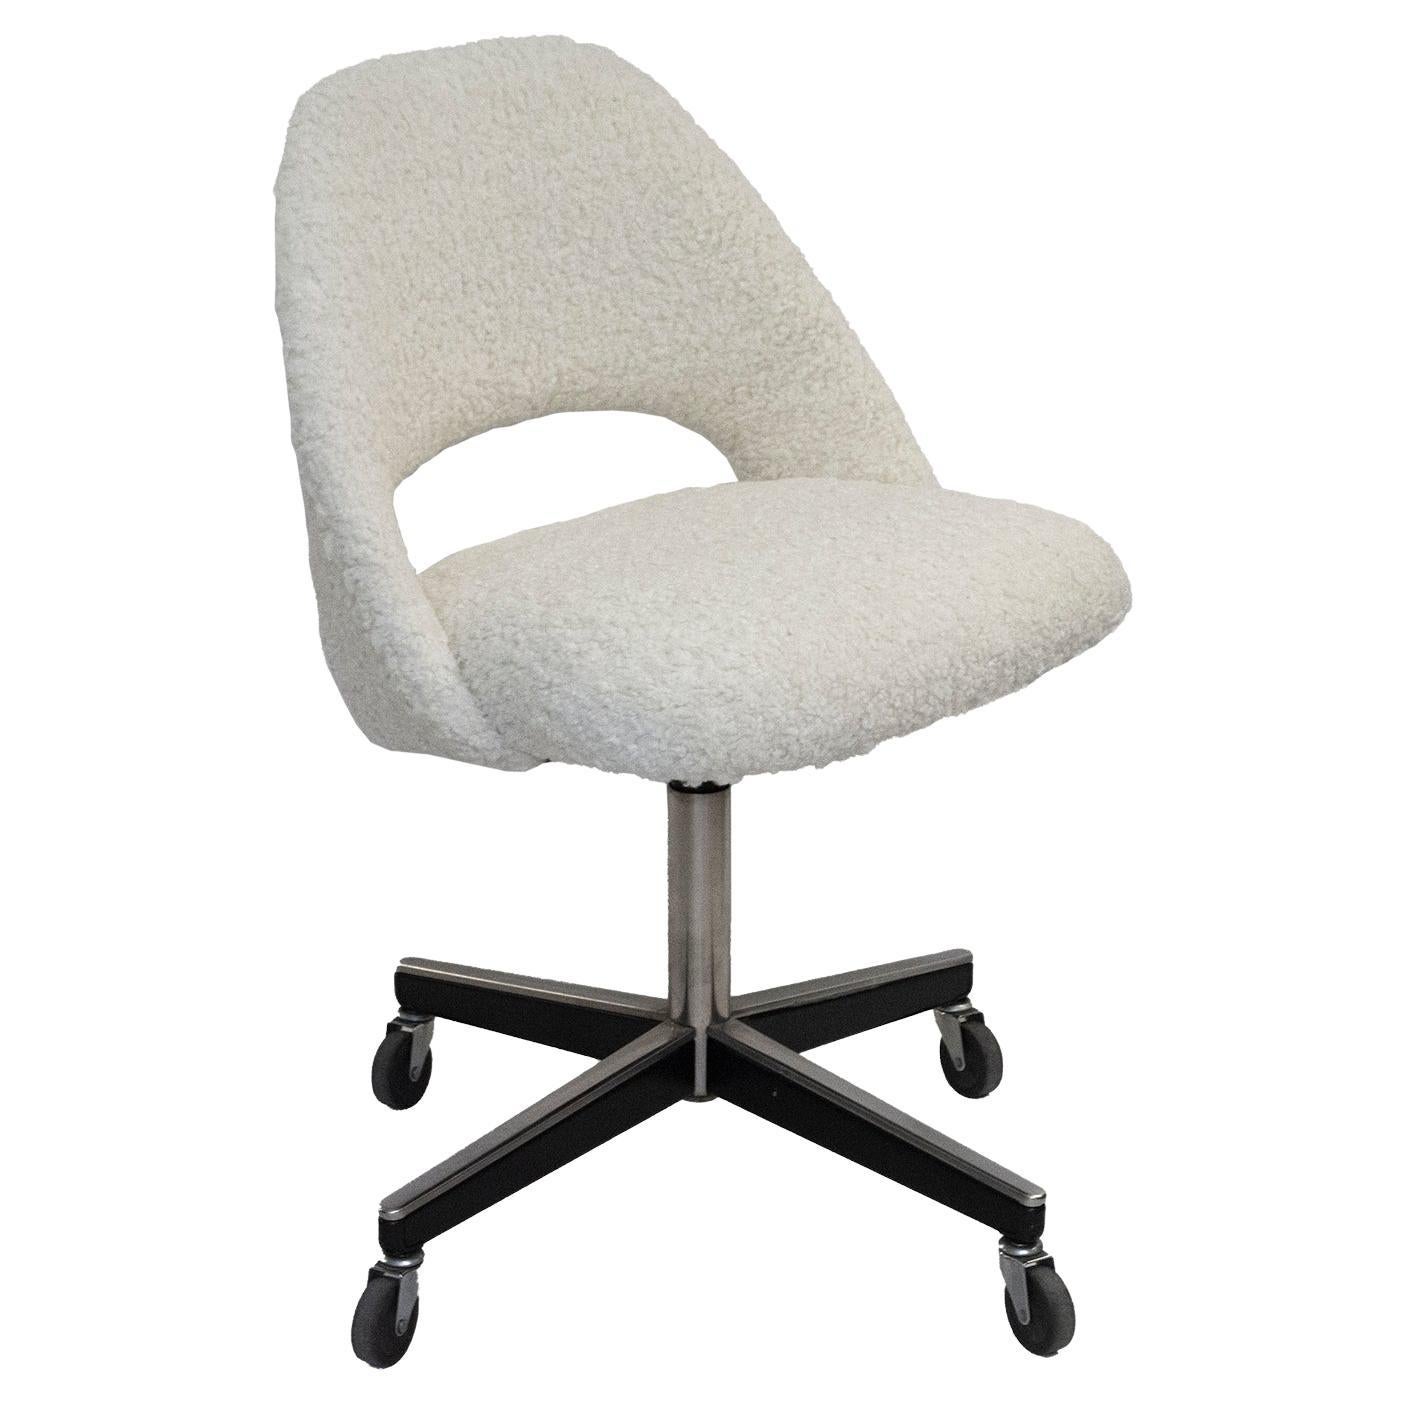 Vintage Knoll Saarinen Desk Swivel Chair Upholstered in White Faux Shearling